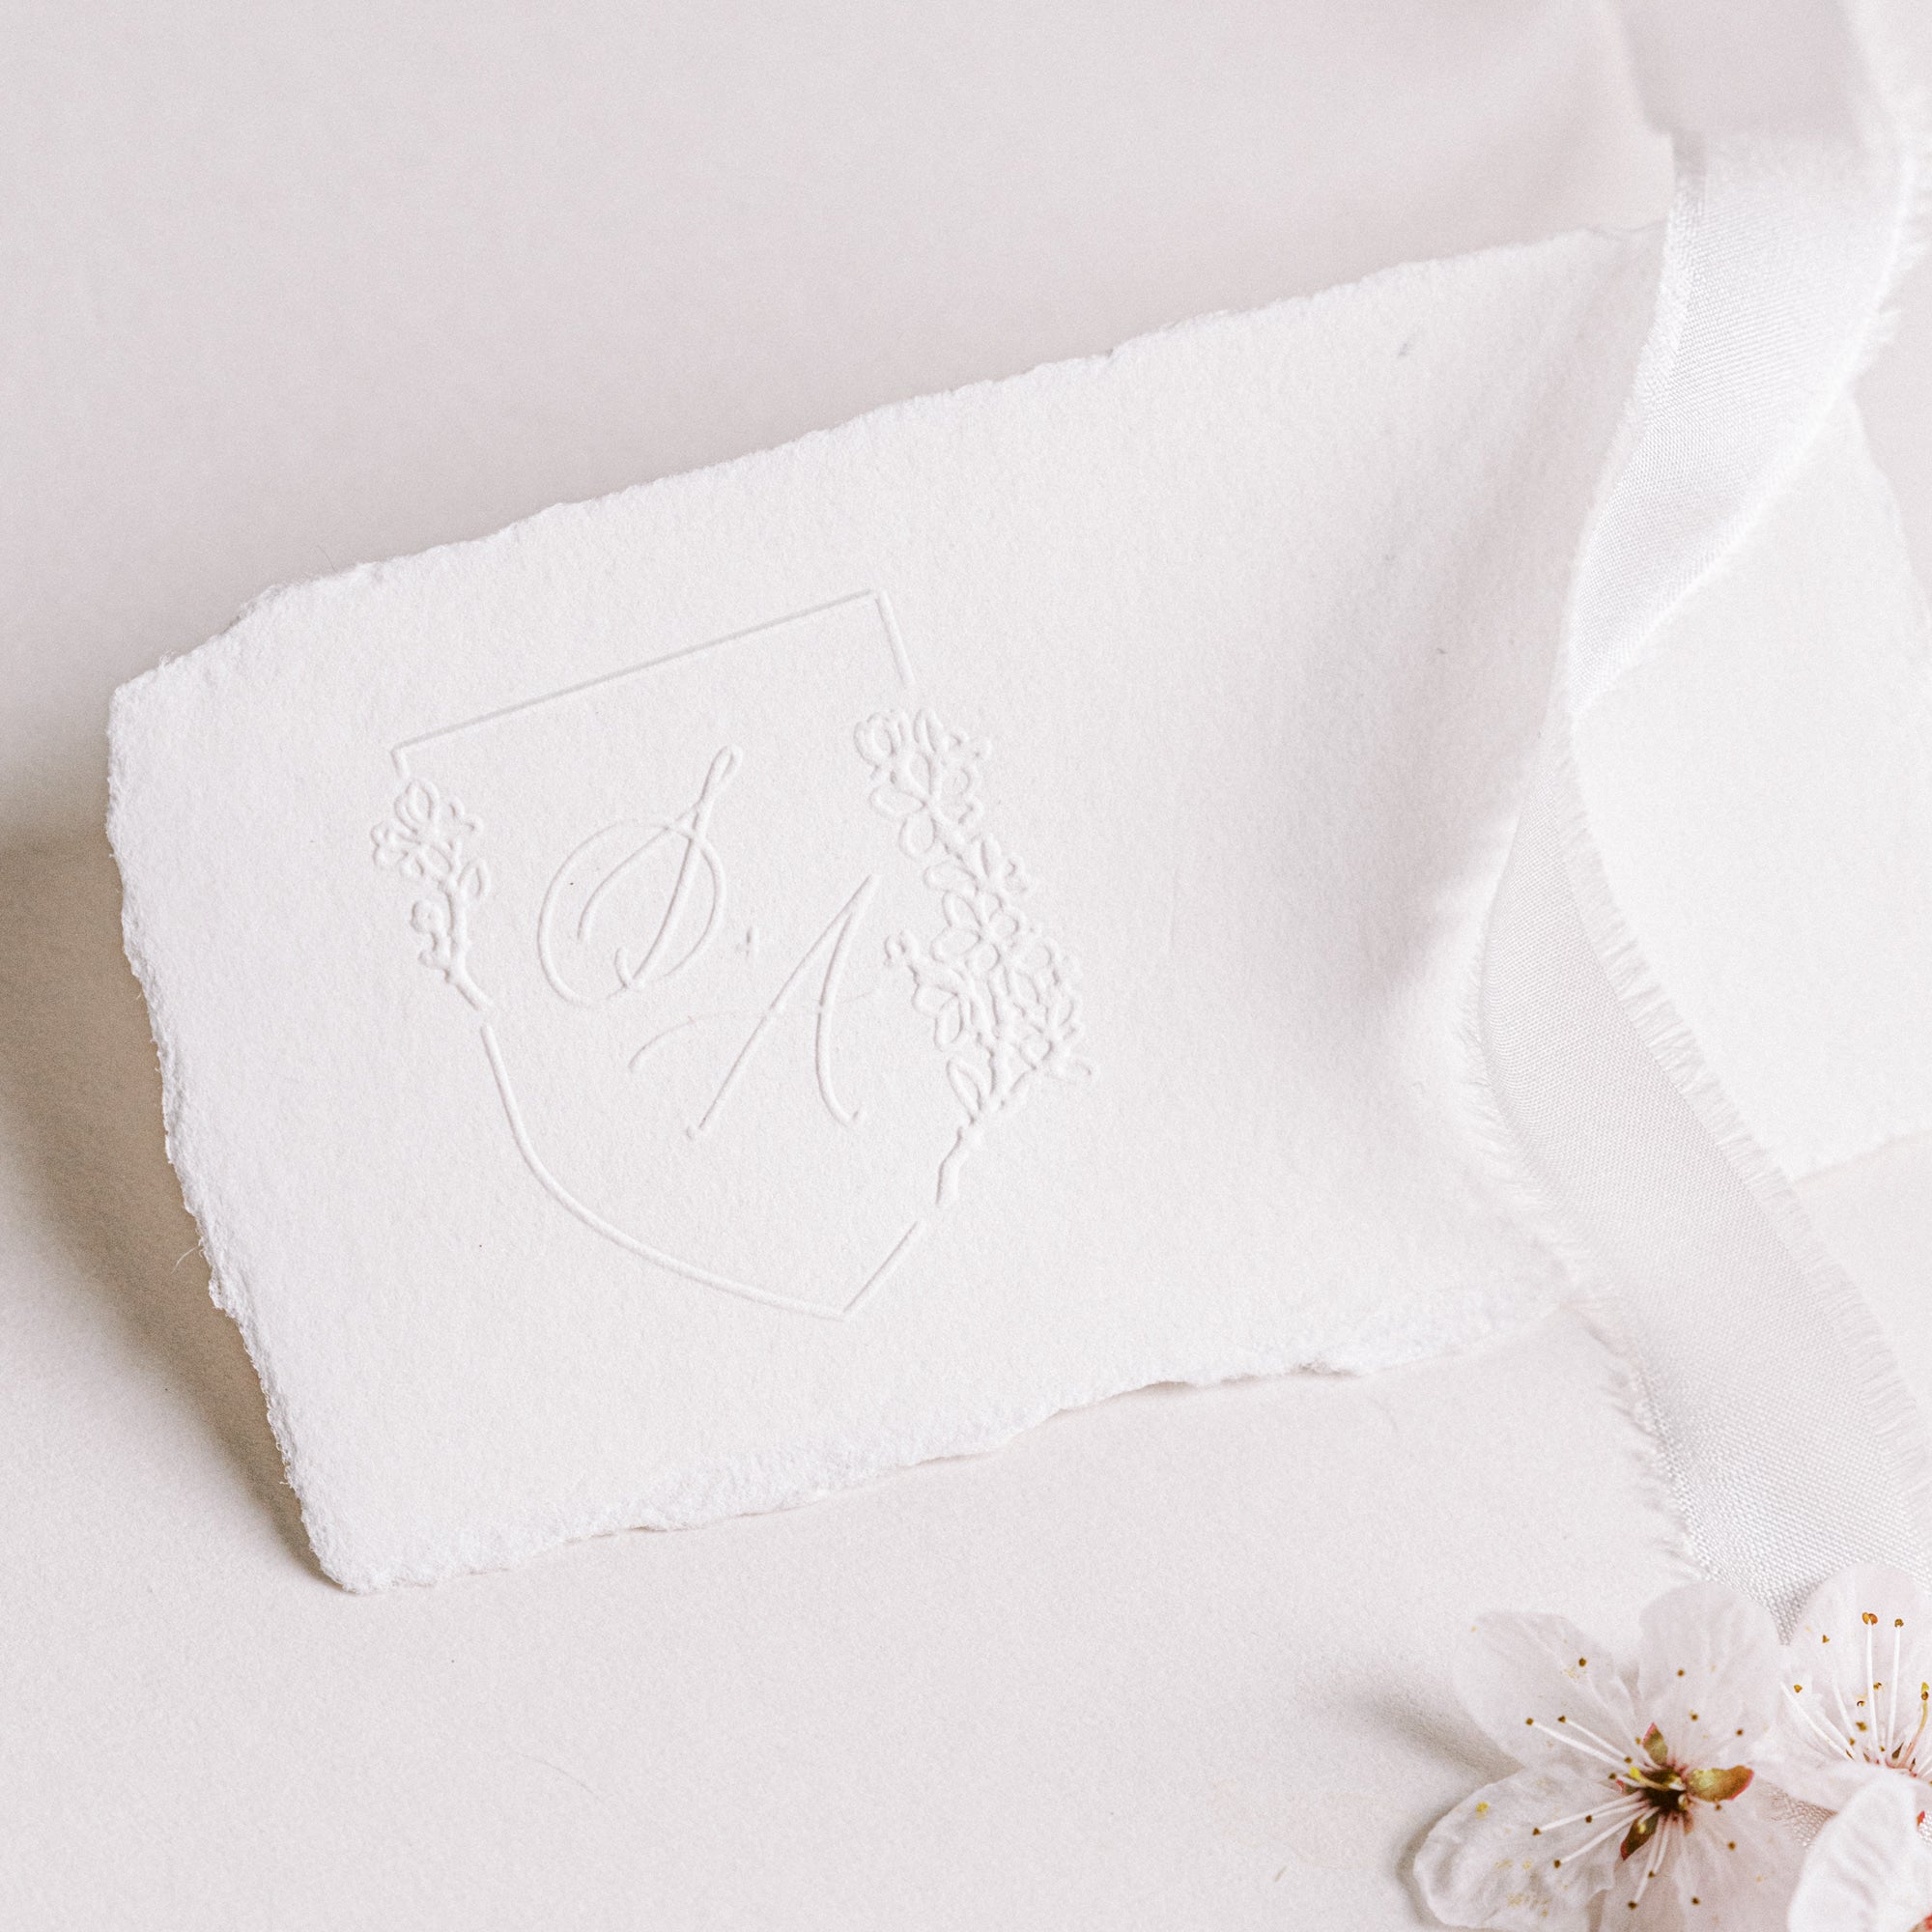 Yoshino Cherry Blossom Calligraphy Script Monogram Embosser for Embossed Fine Art Wedding Invitation Envelopes, Menus & Packaging | Cherry Blossom Blush Pink Spring Wedding Inspiration | Heirloom Seals